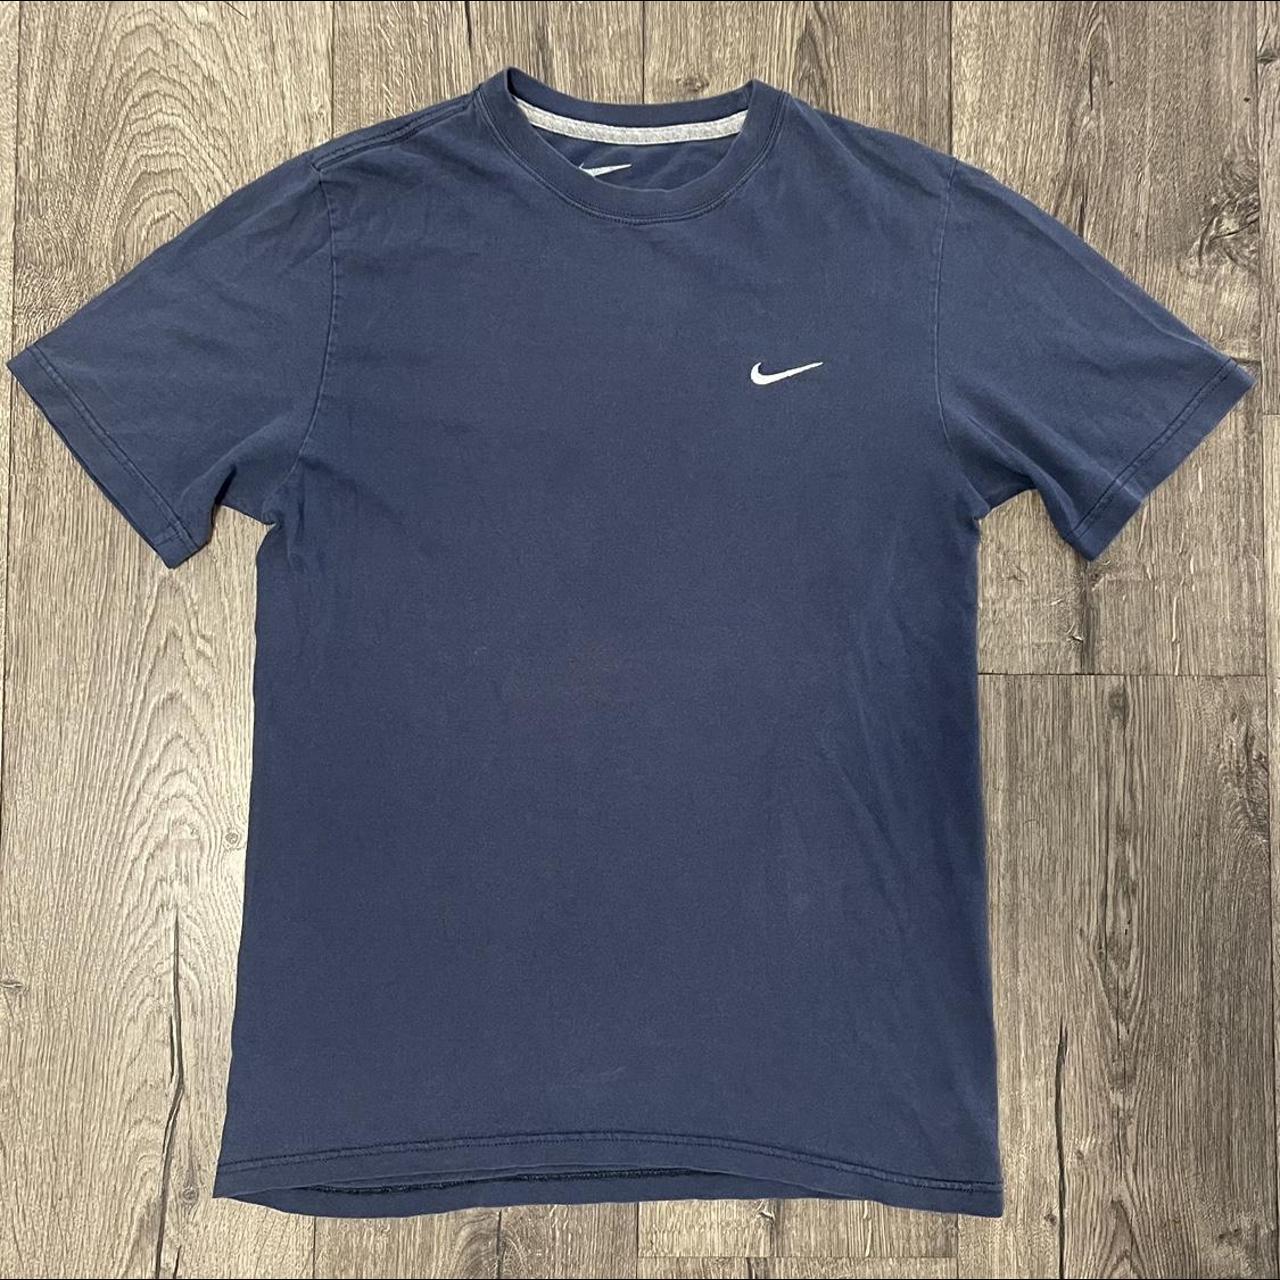 Nike Men's Navy T-shirt | Depop